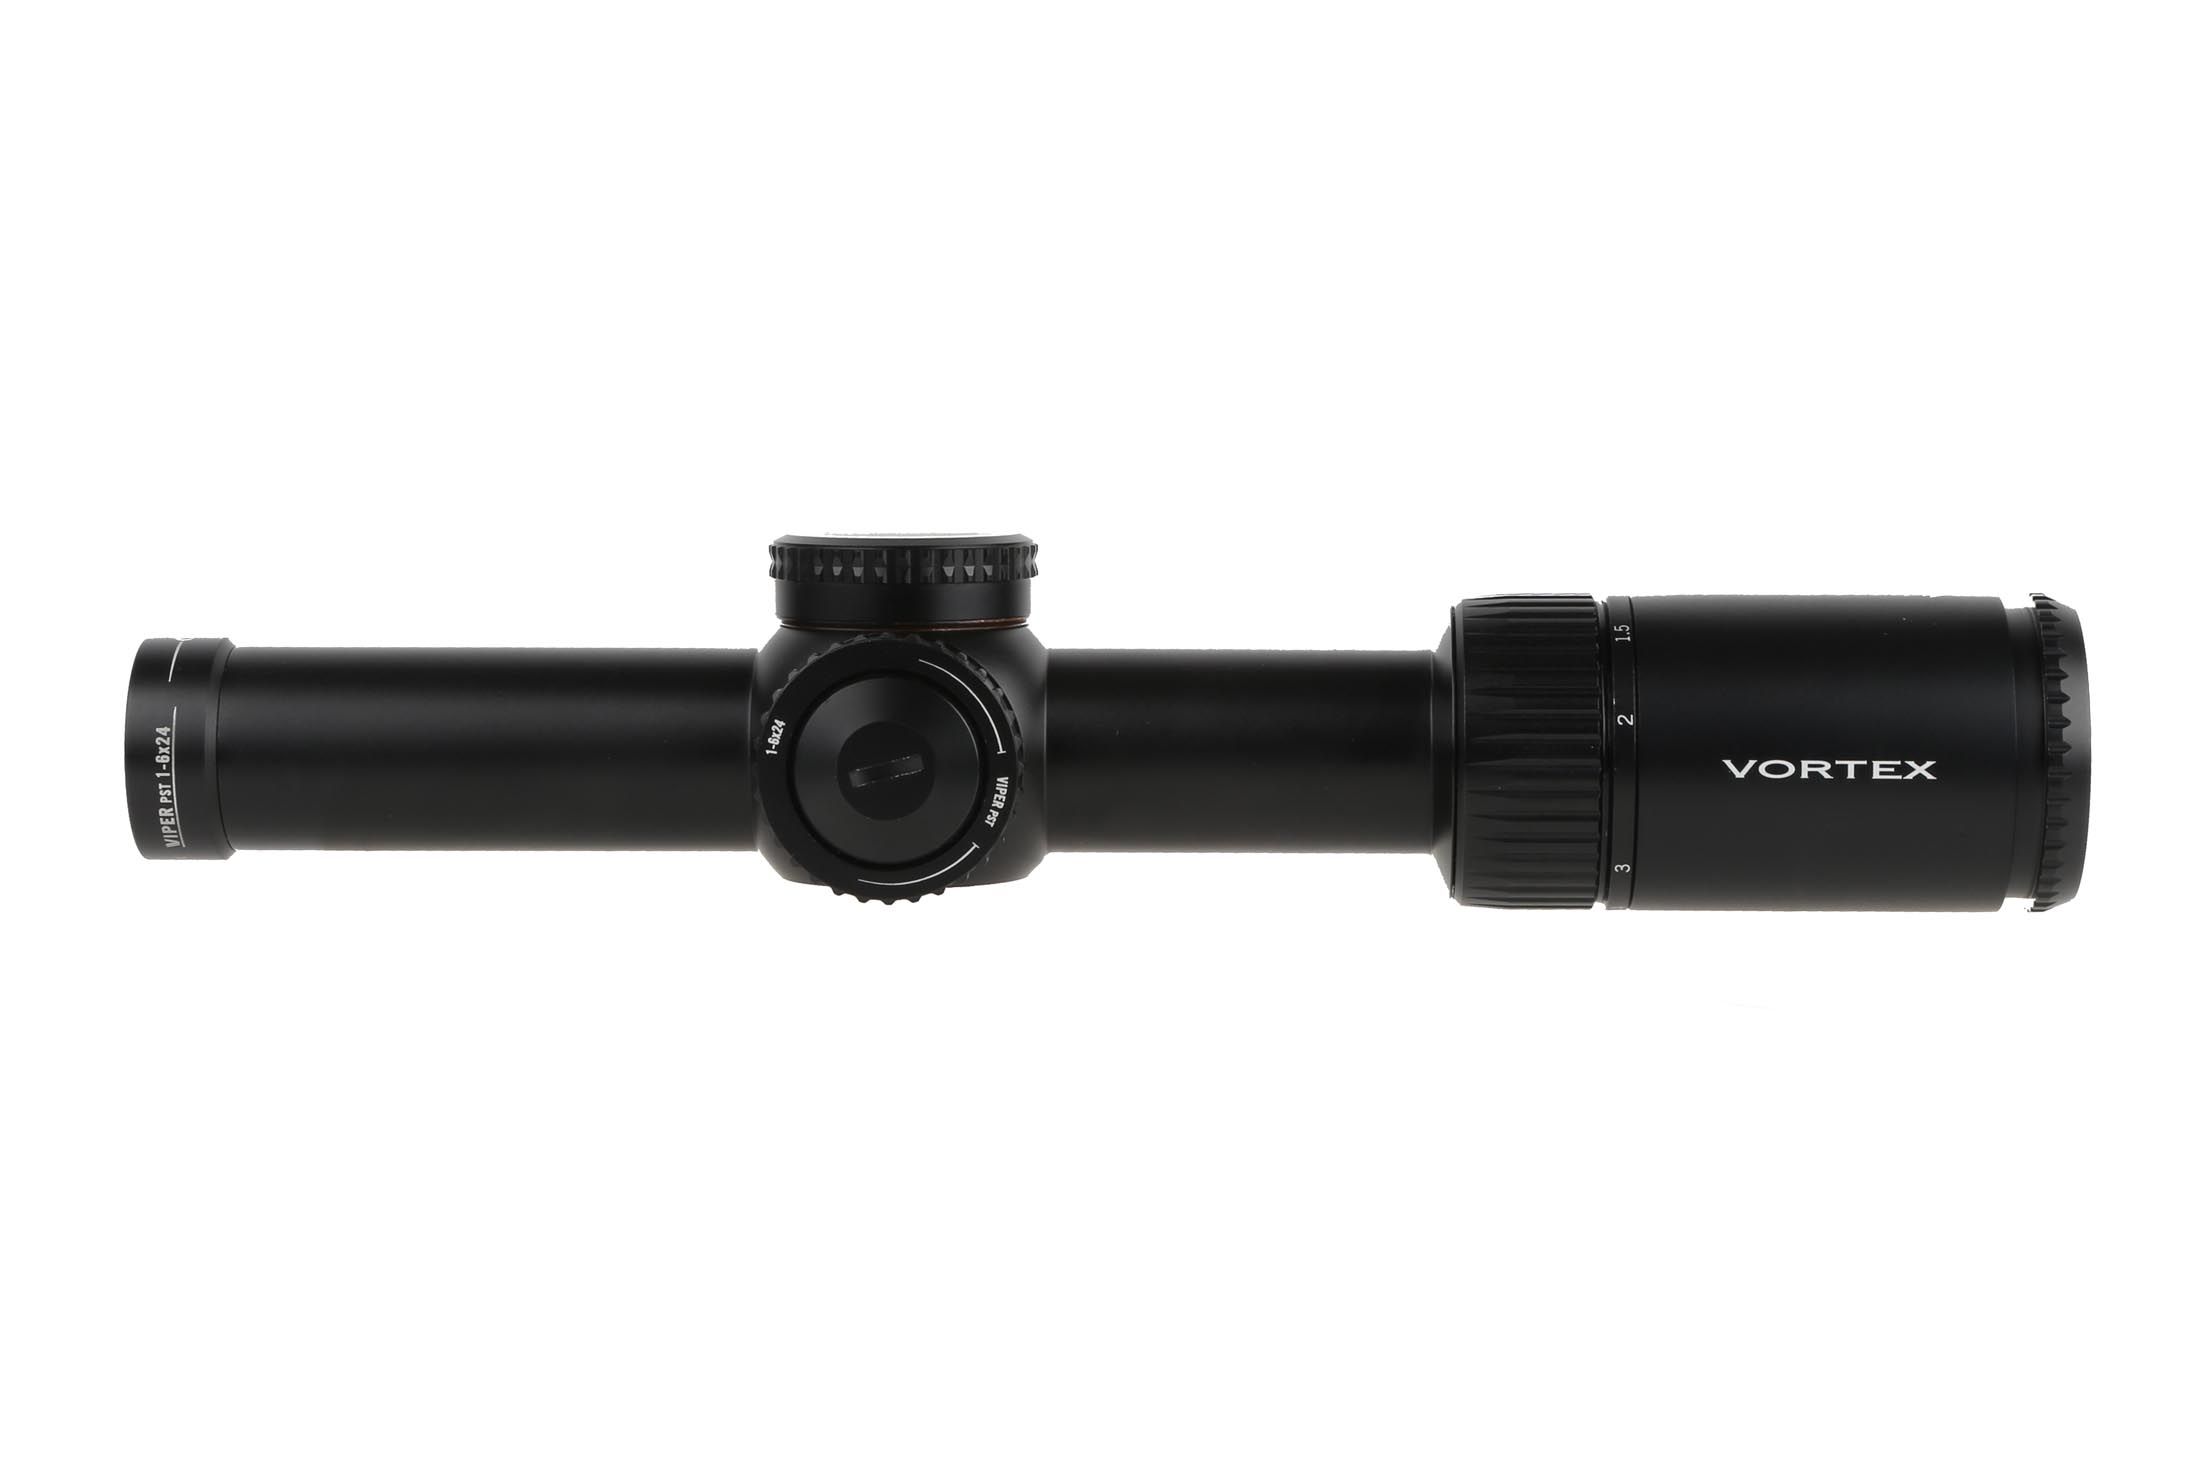 Vortex Viper PST Gen II 1-6x24 SFP VMR-2 MRAD Riflescope